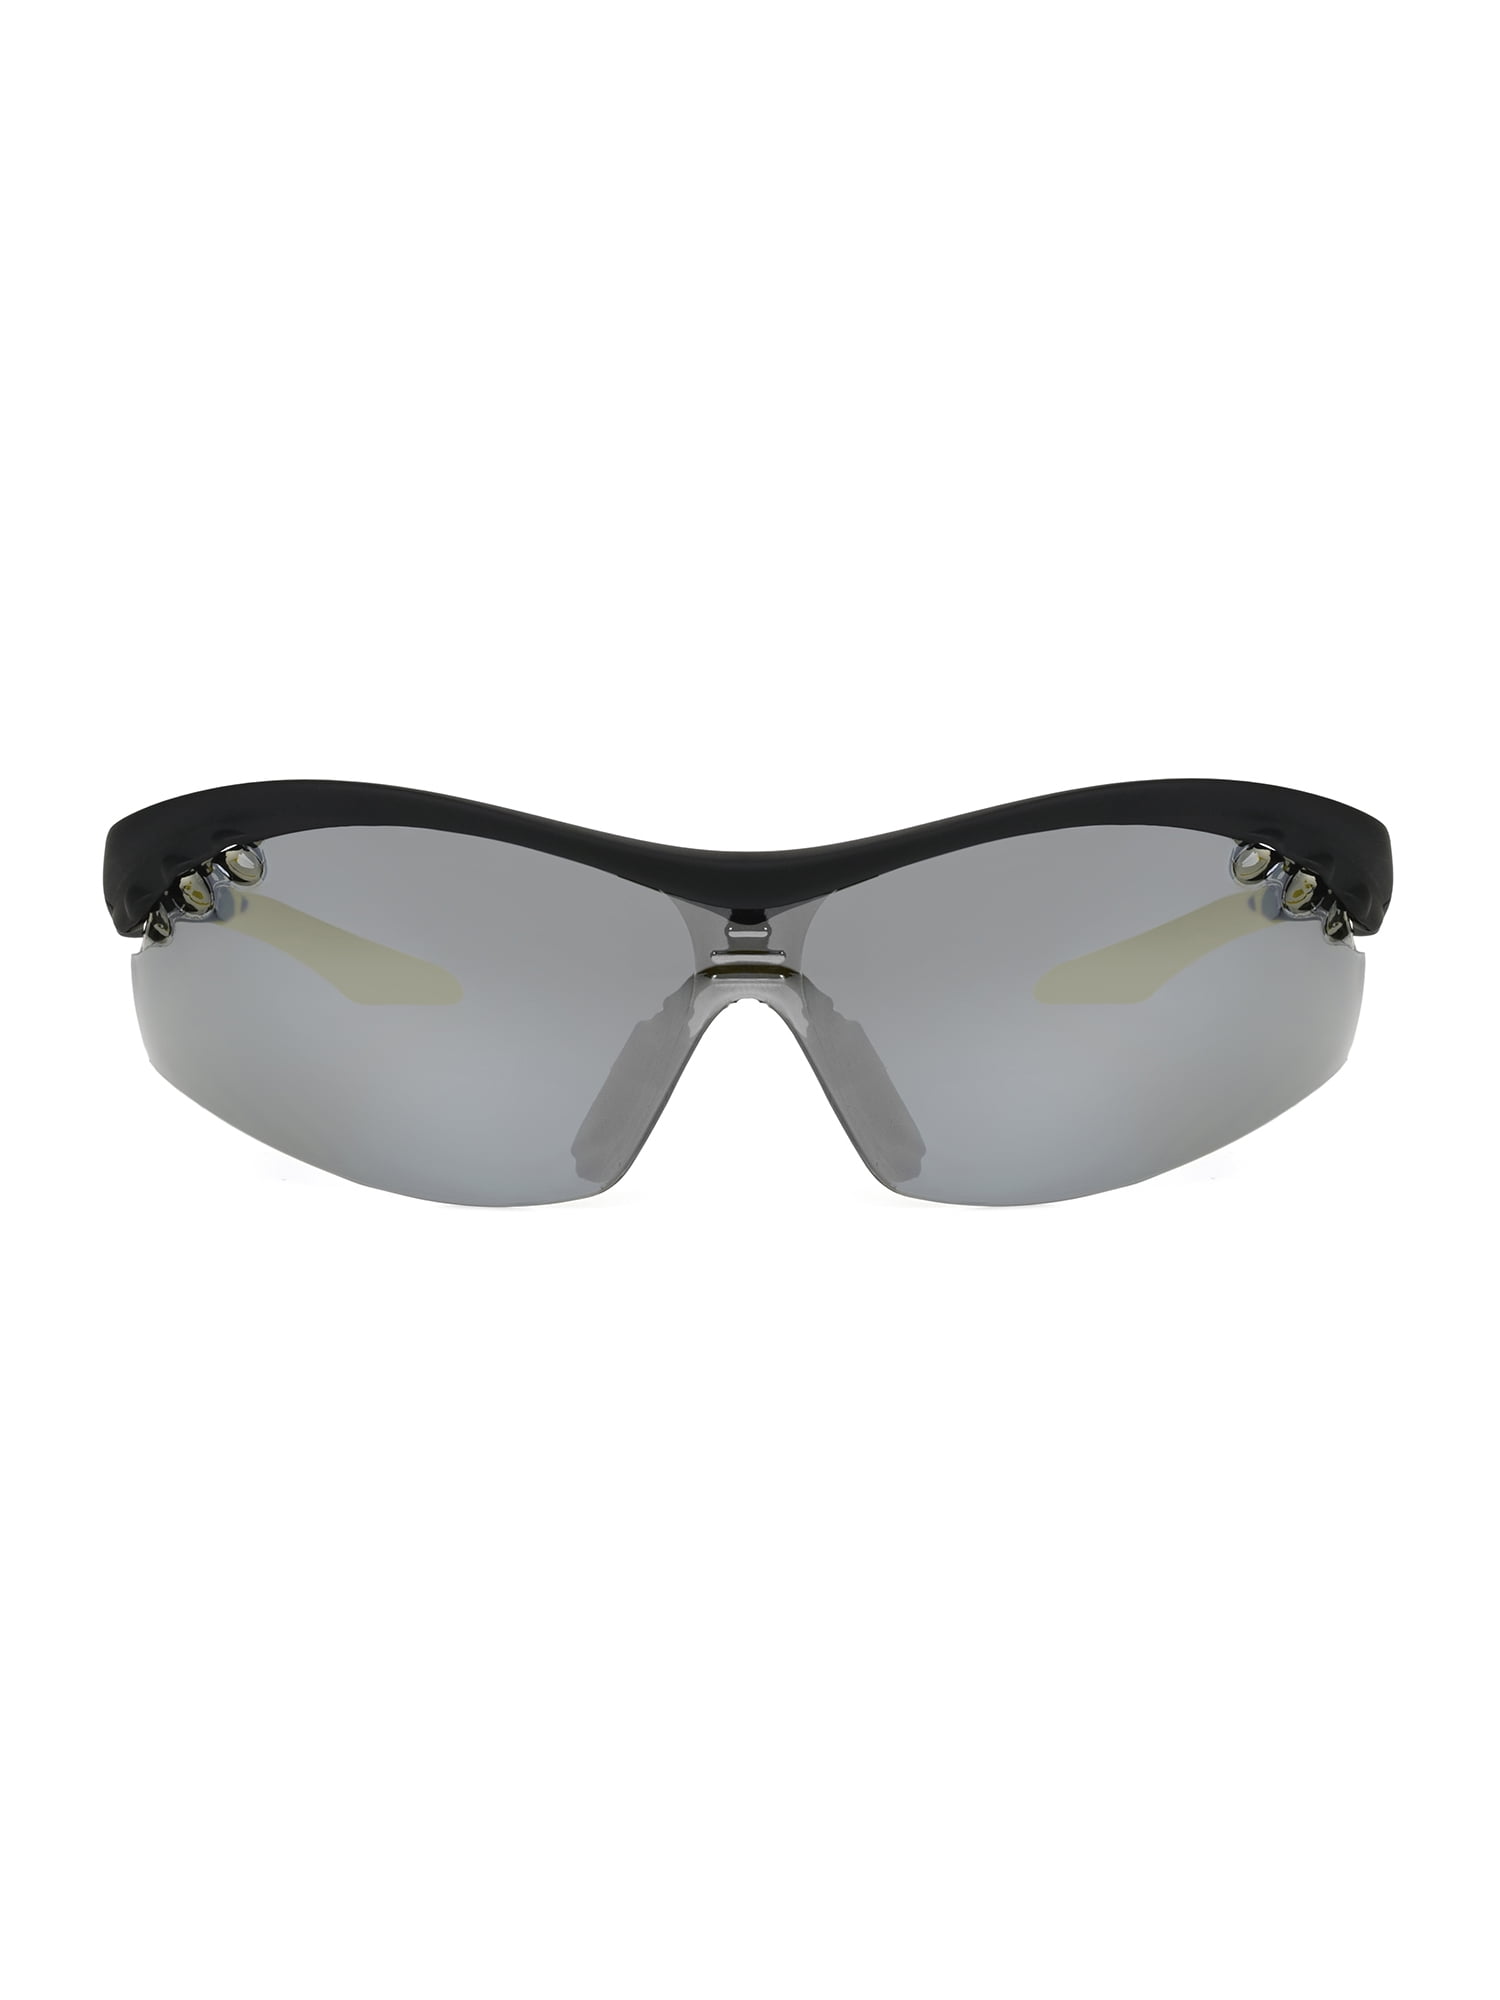 IronMan Sunglasses Ironflex 3 Gray and Orange Lightweight Frames 